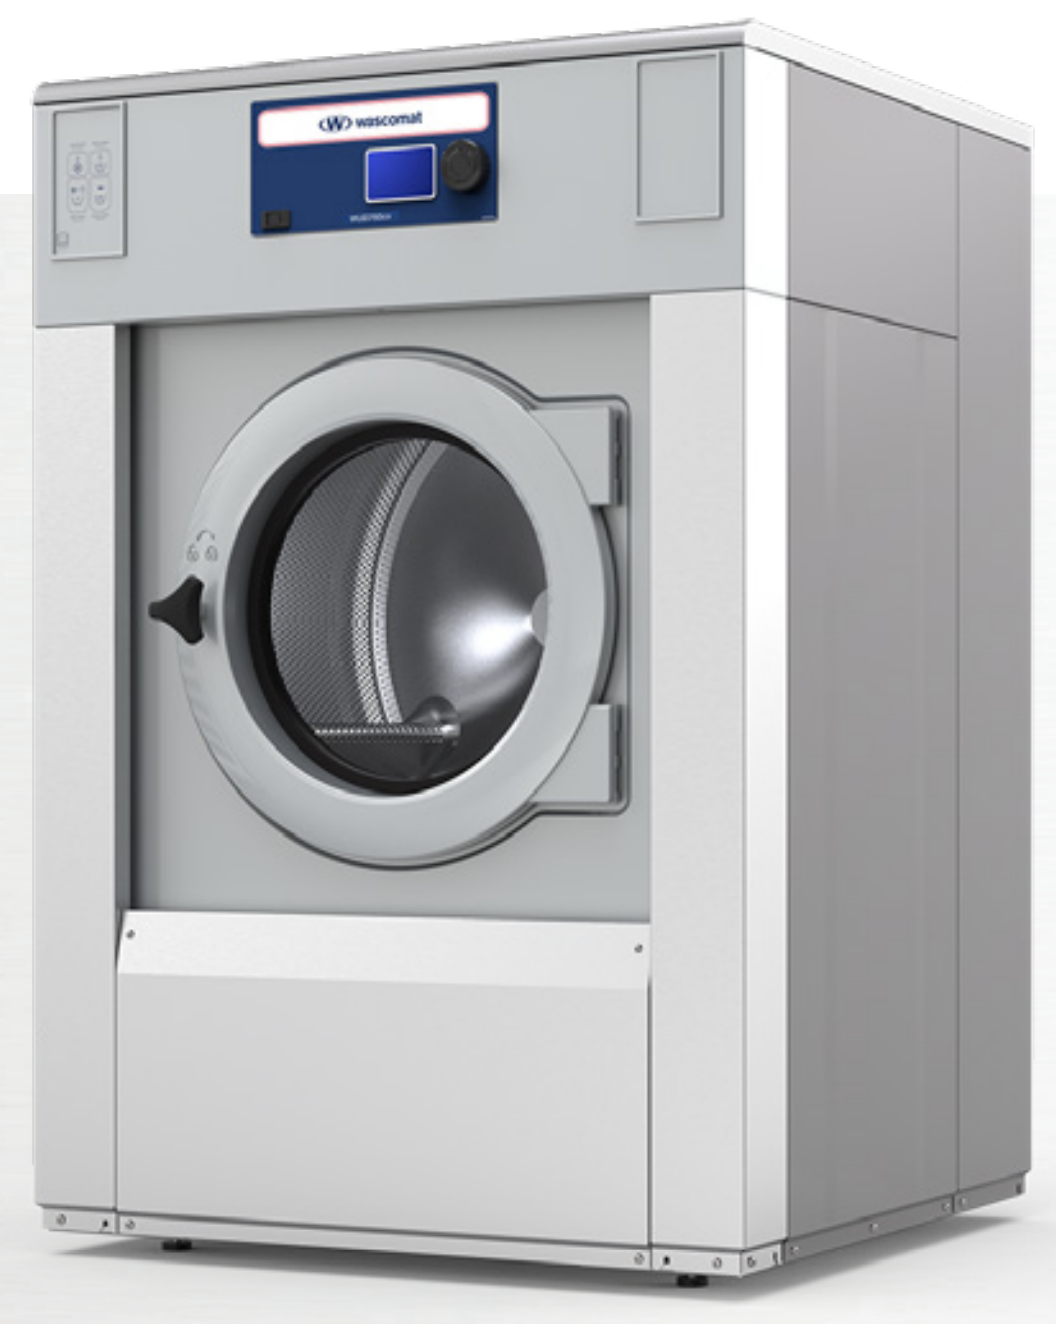 New 2022 Wascomat Wud775 Opl - Automatic Laundry Service Of Va, Inc.